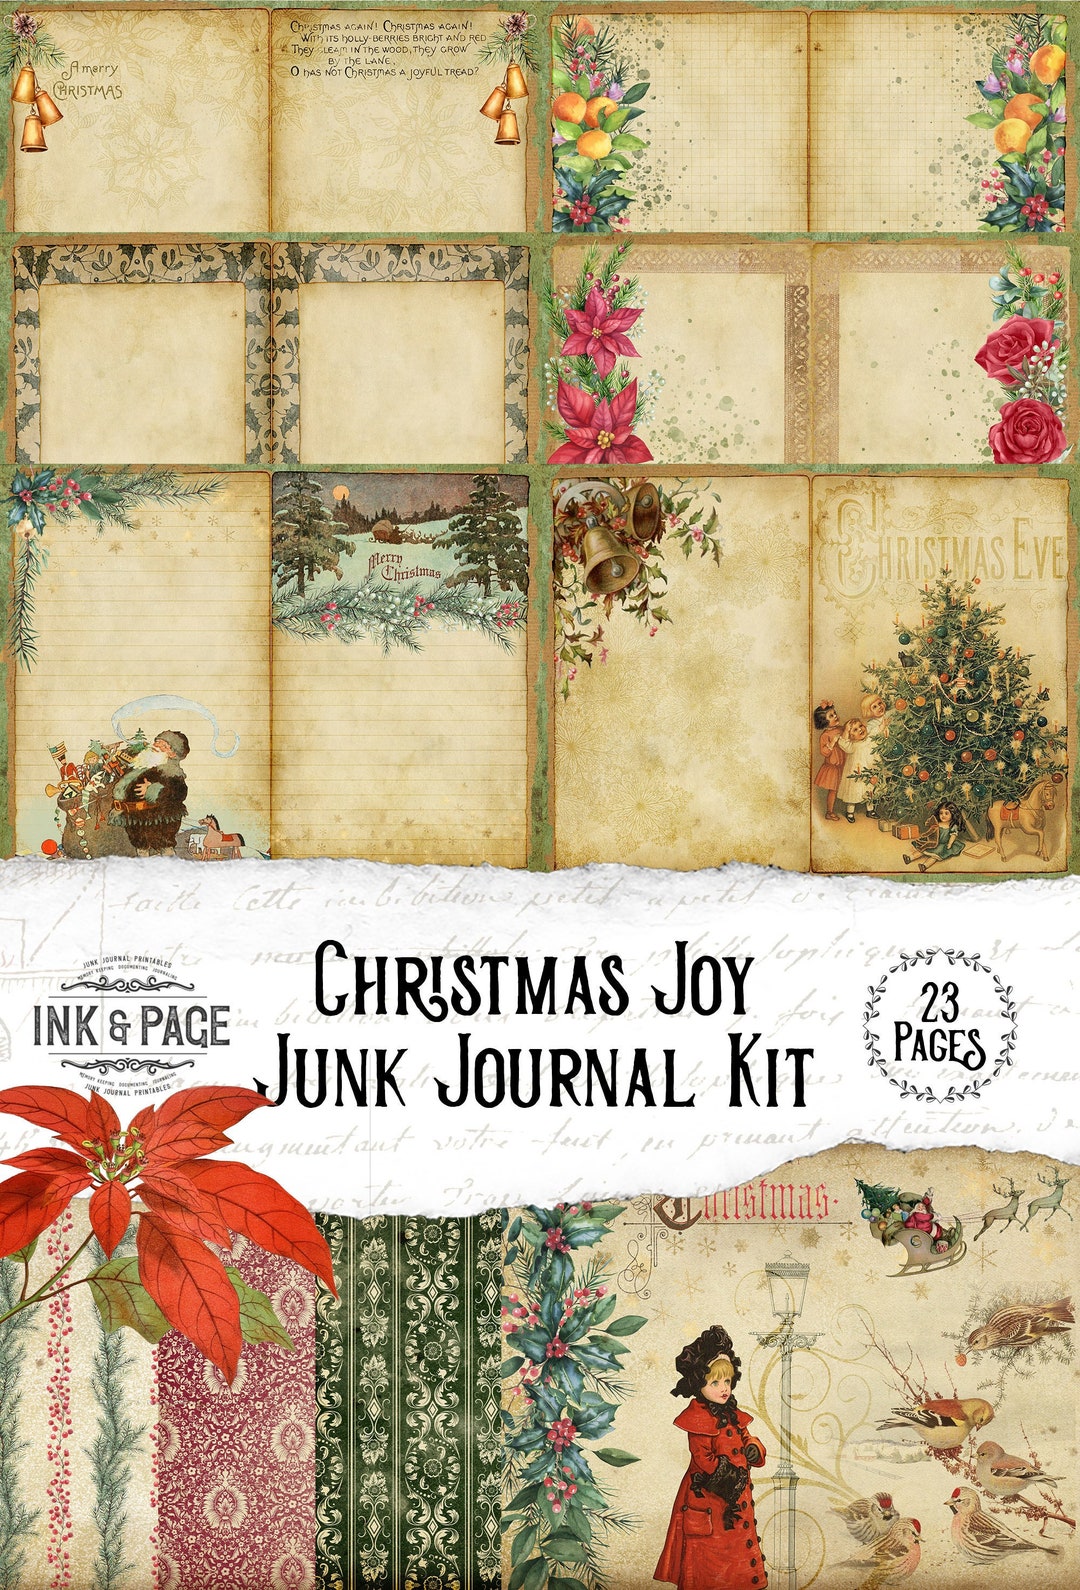 New!!! Joyful Journal Kit